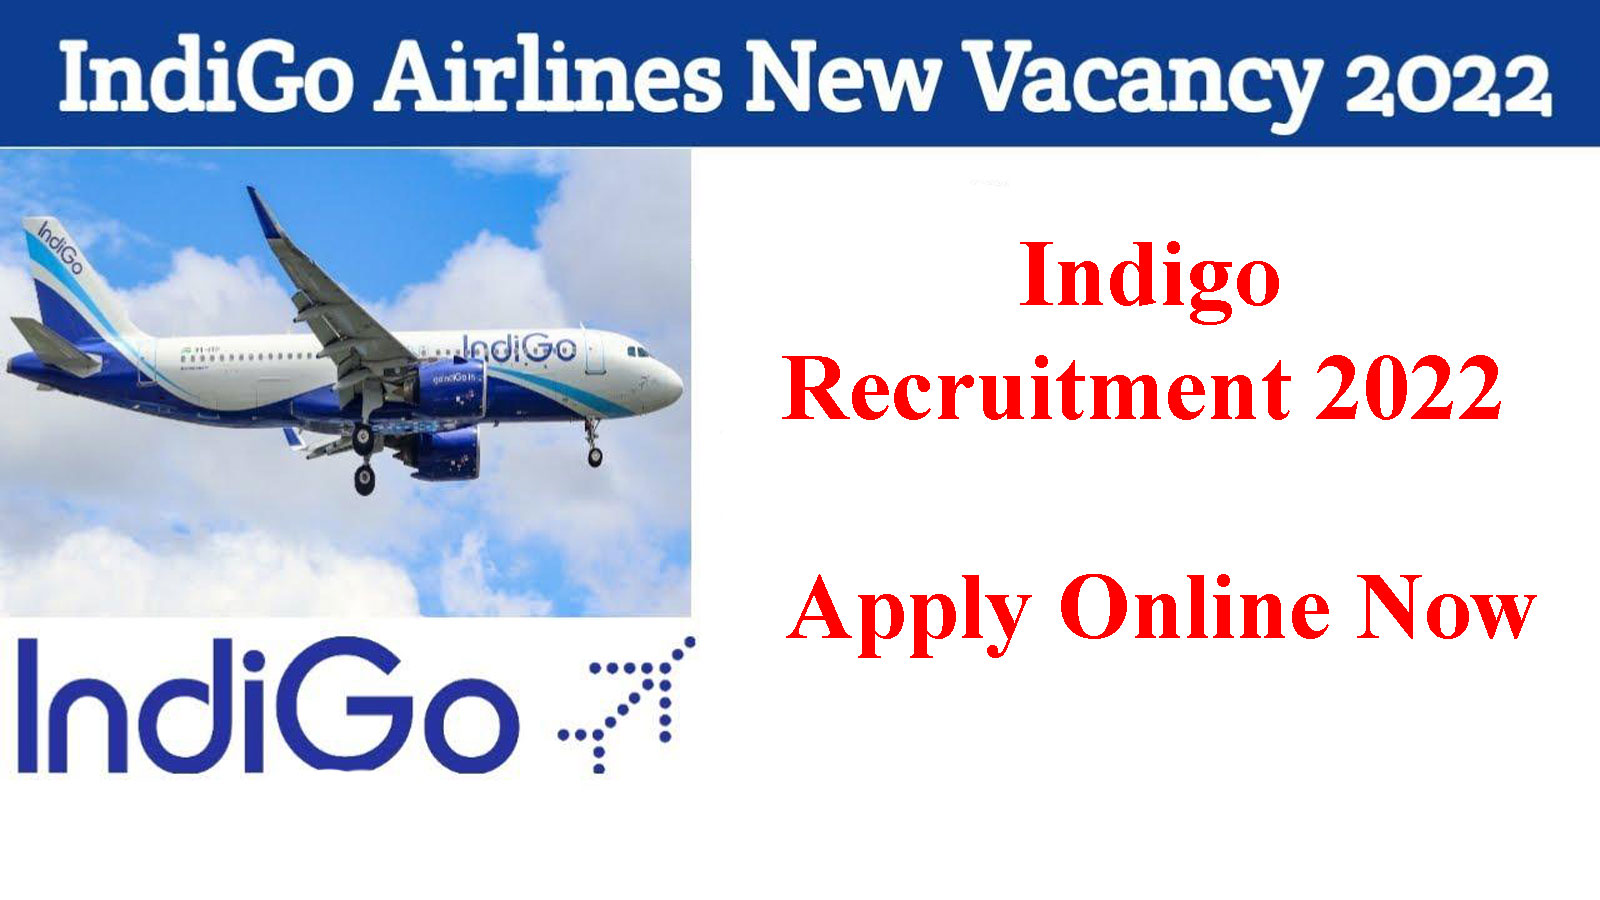 Indigo Recruitment, Check Eligibility and Apply Online